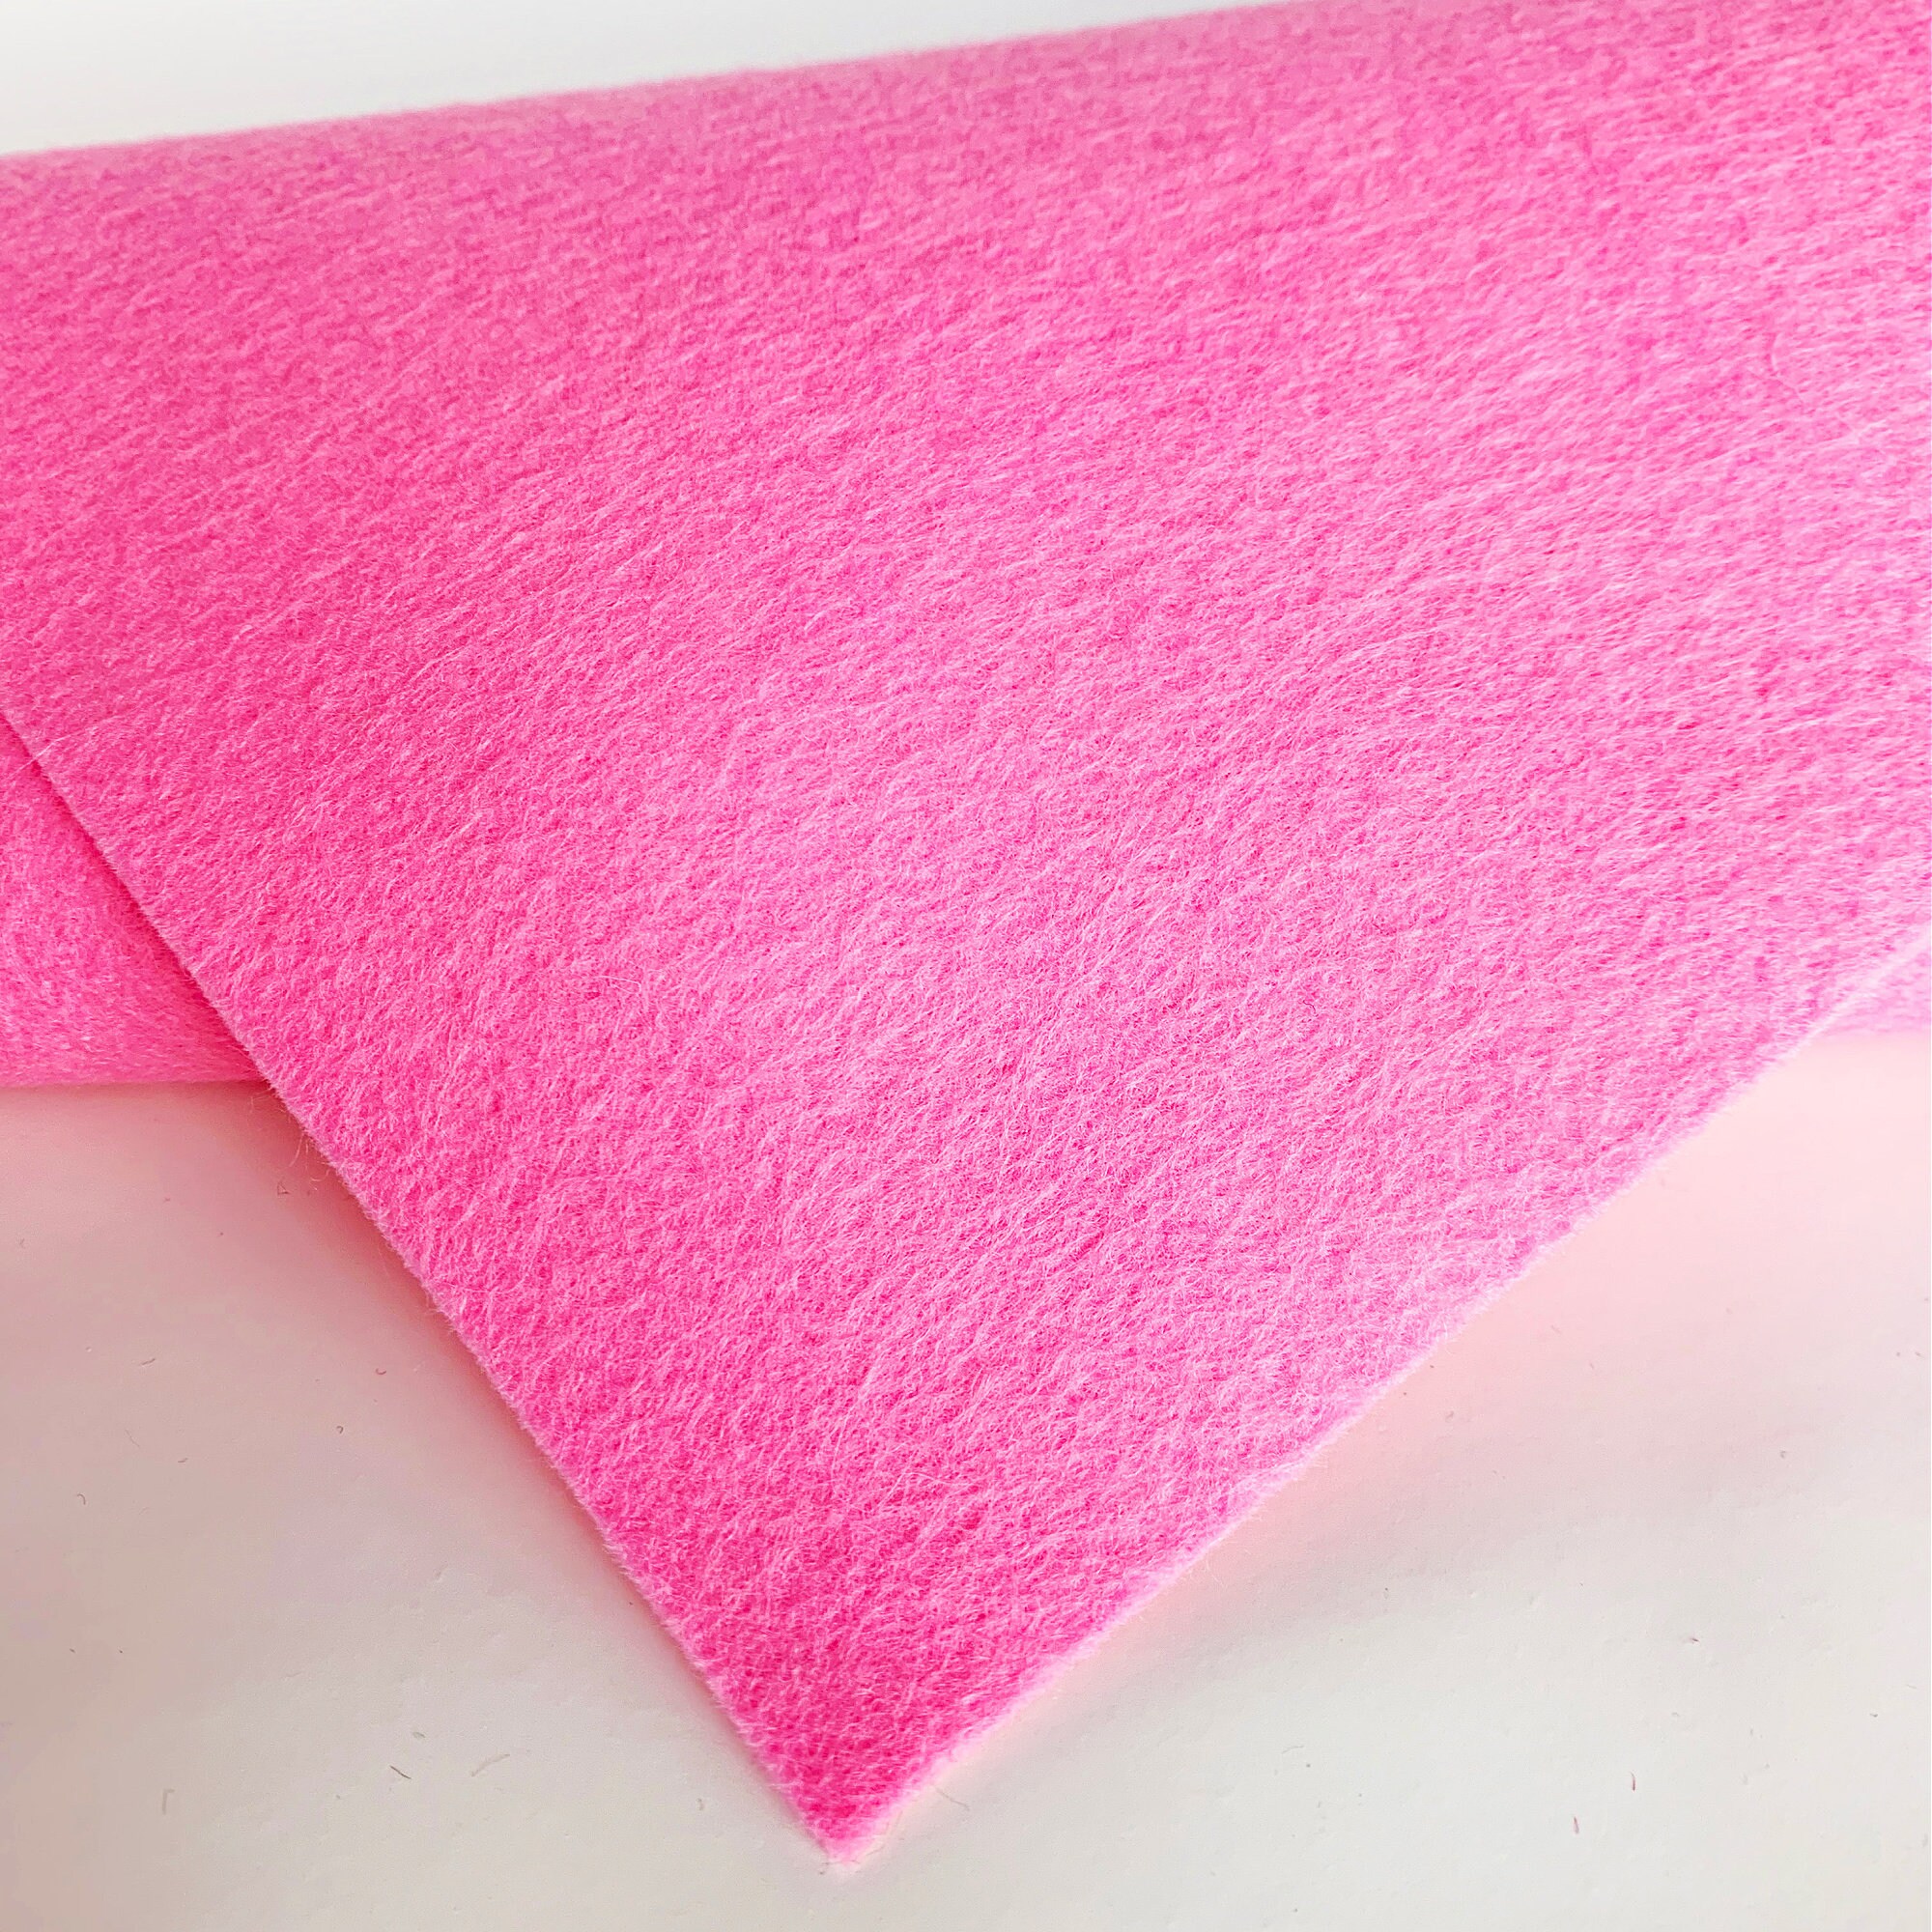 Cotton Candy Wool Felt, Merino Blend Pink Felt Yardage, Fabric, Bright Fabric